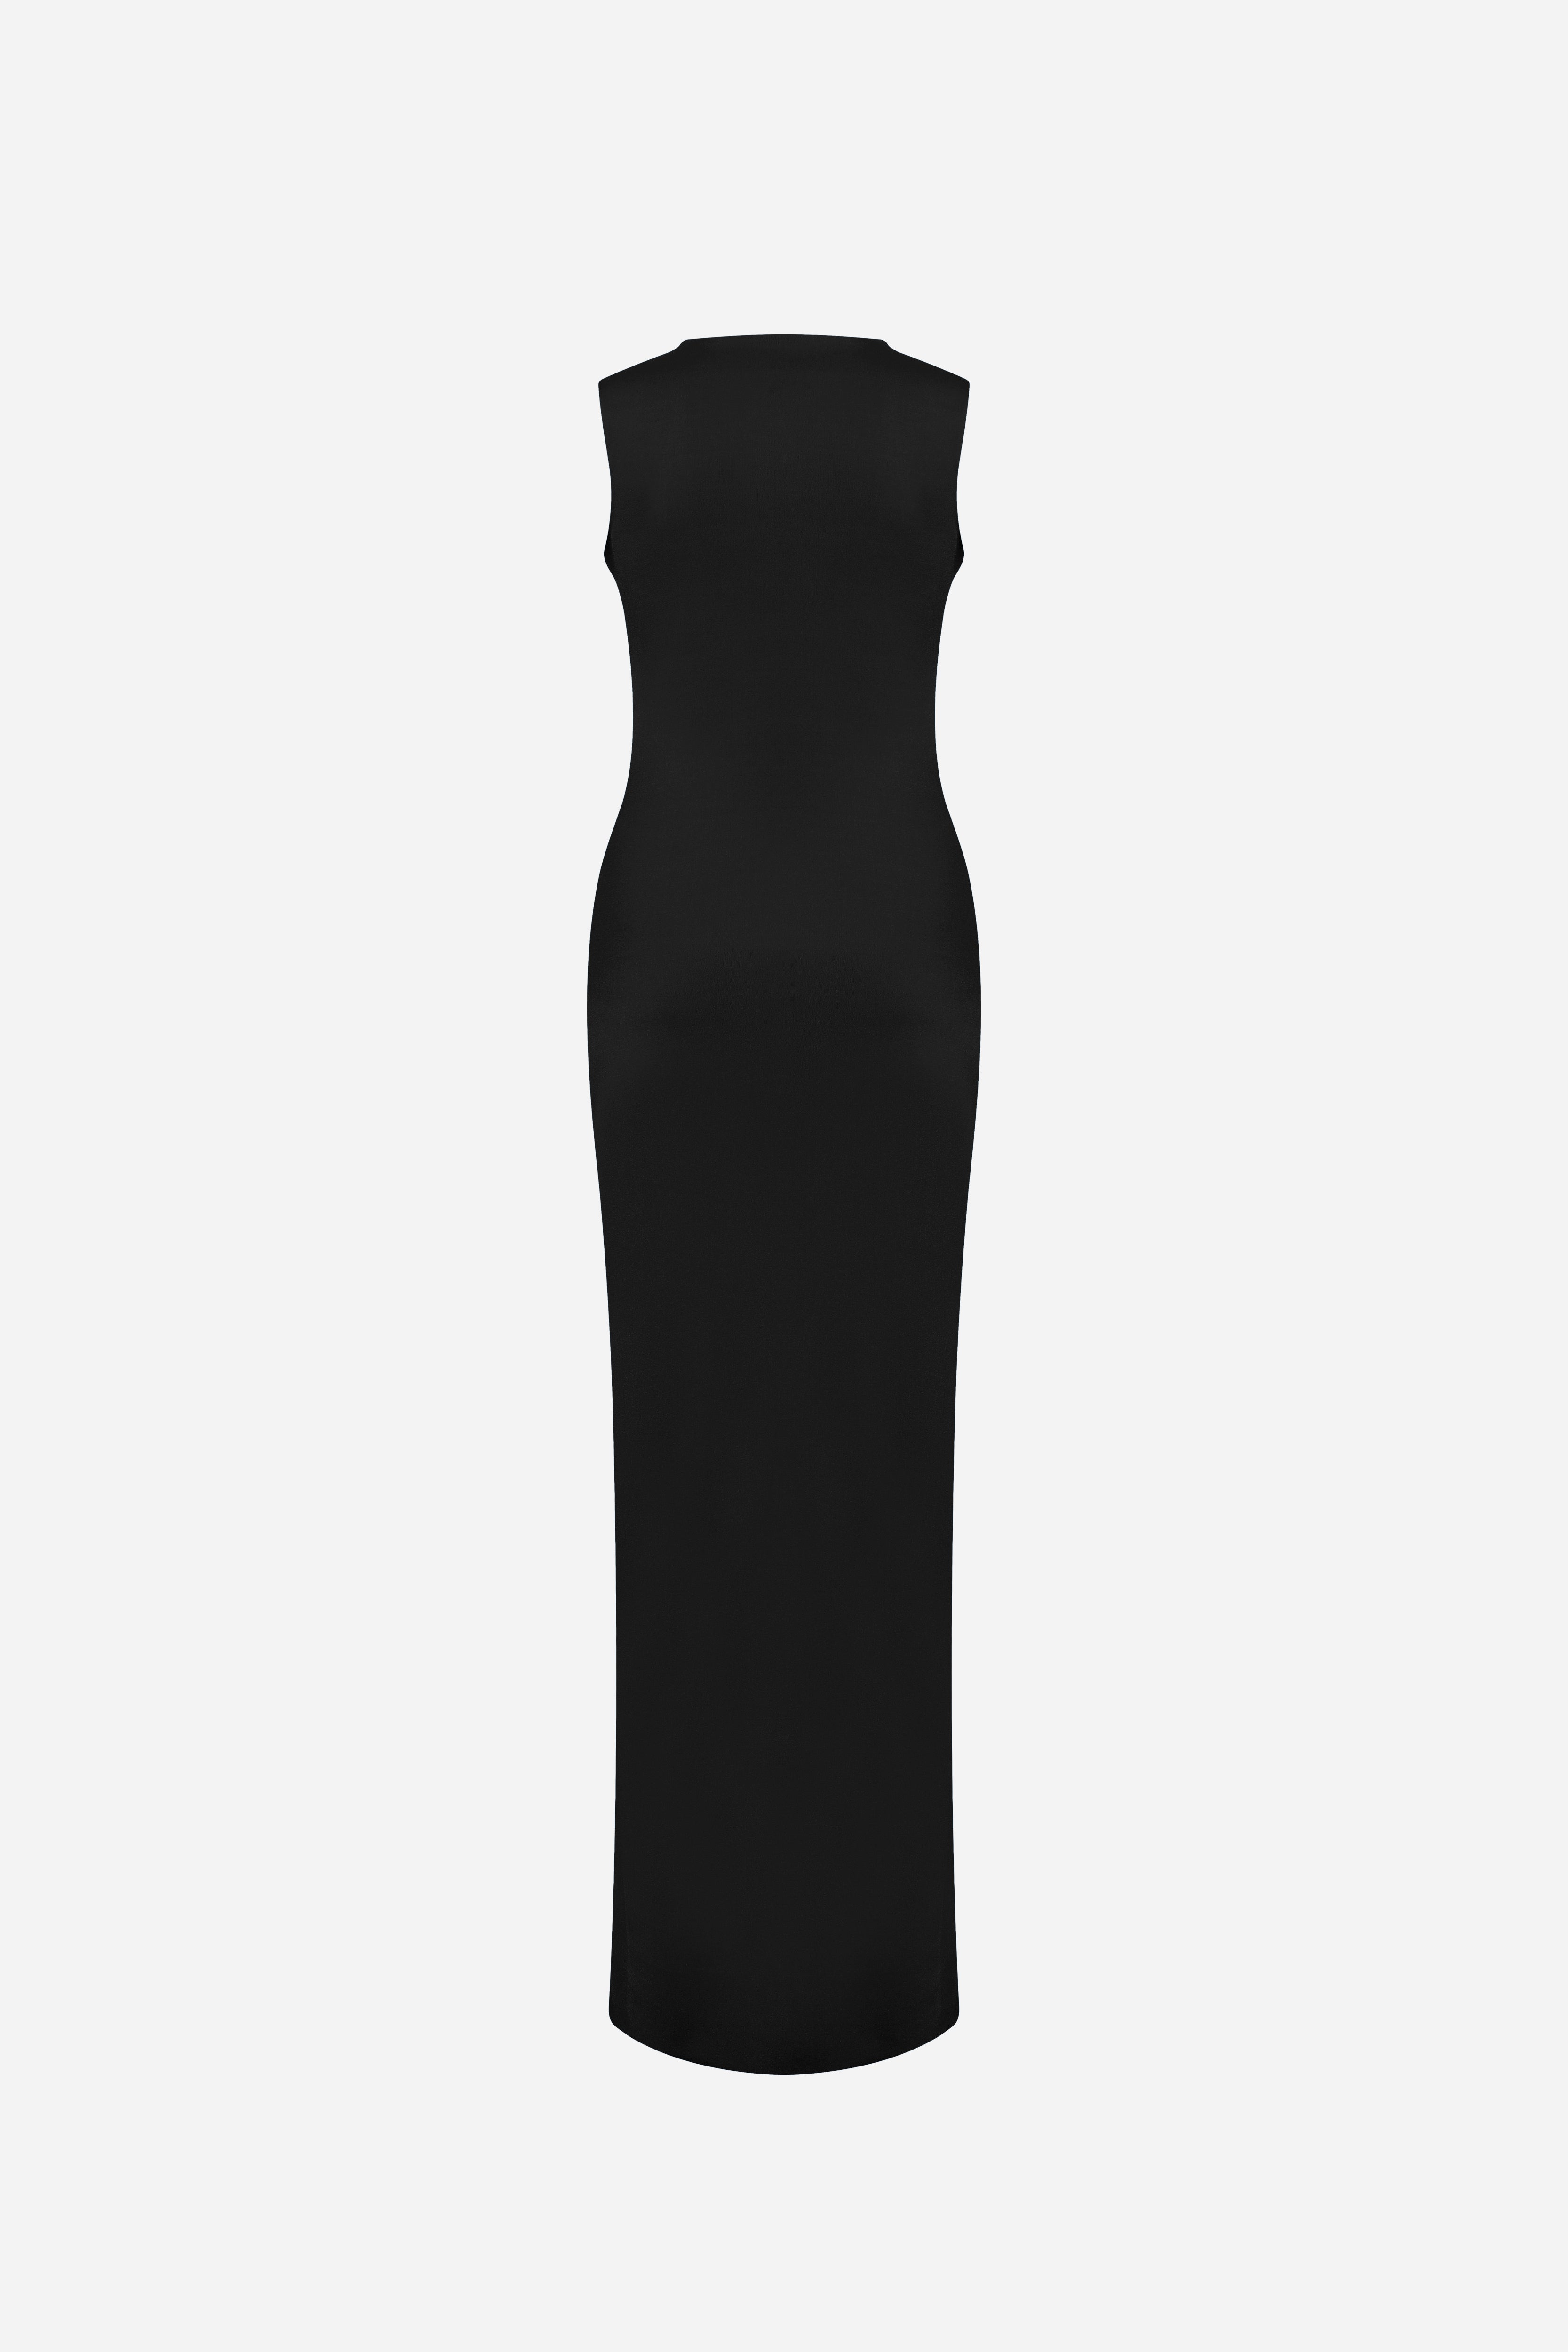 Margot - Sleeveless Maxi Dress With 4 Slit Openings